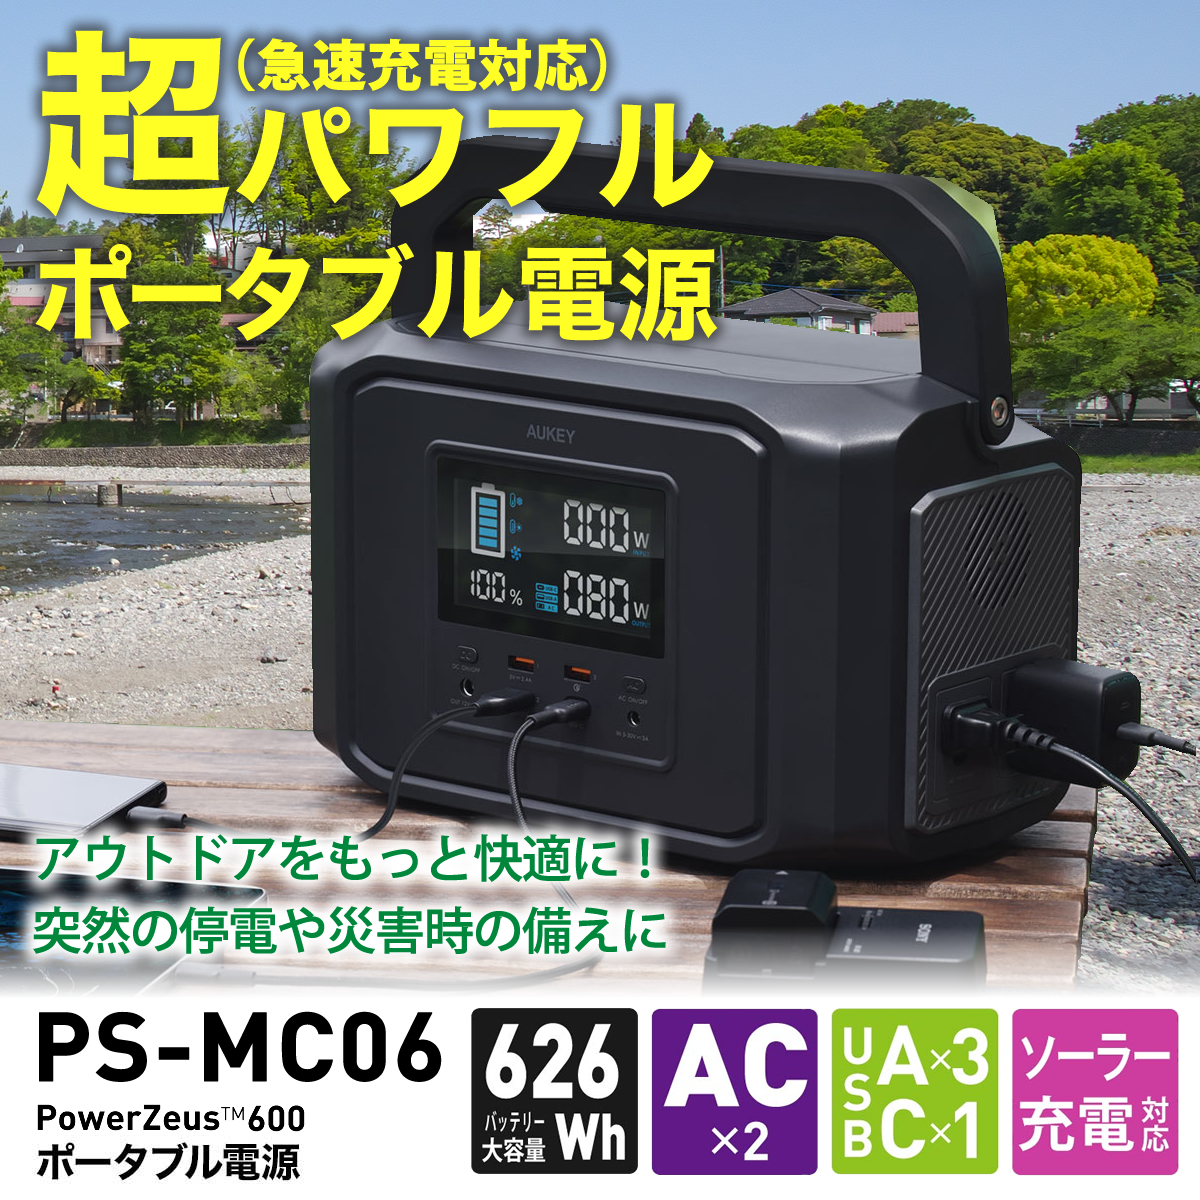 AUKEY 626Wh ポータブル電源 PS-MC06